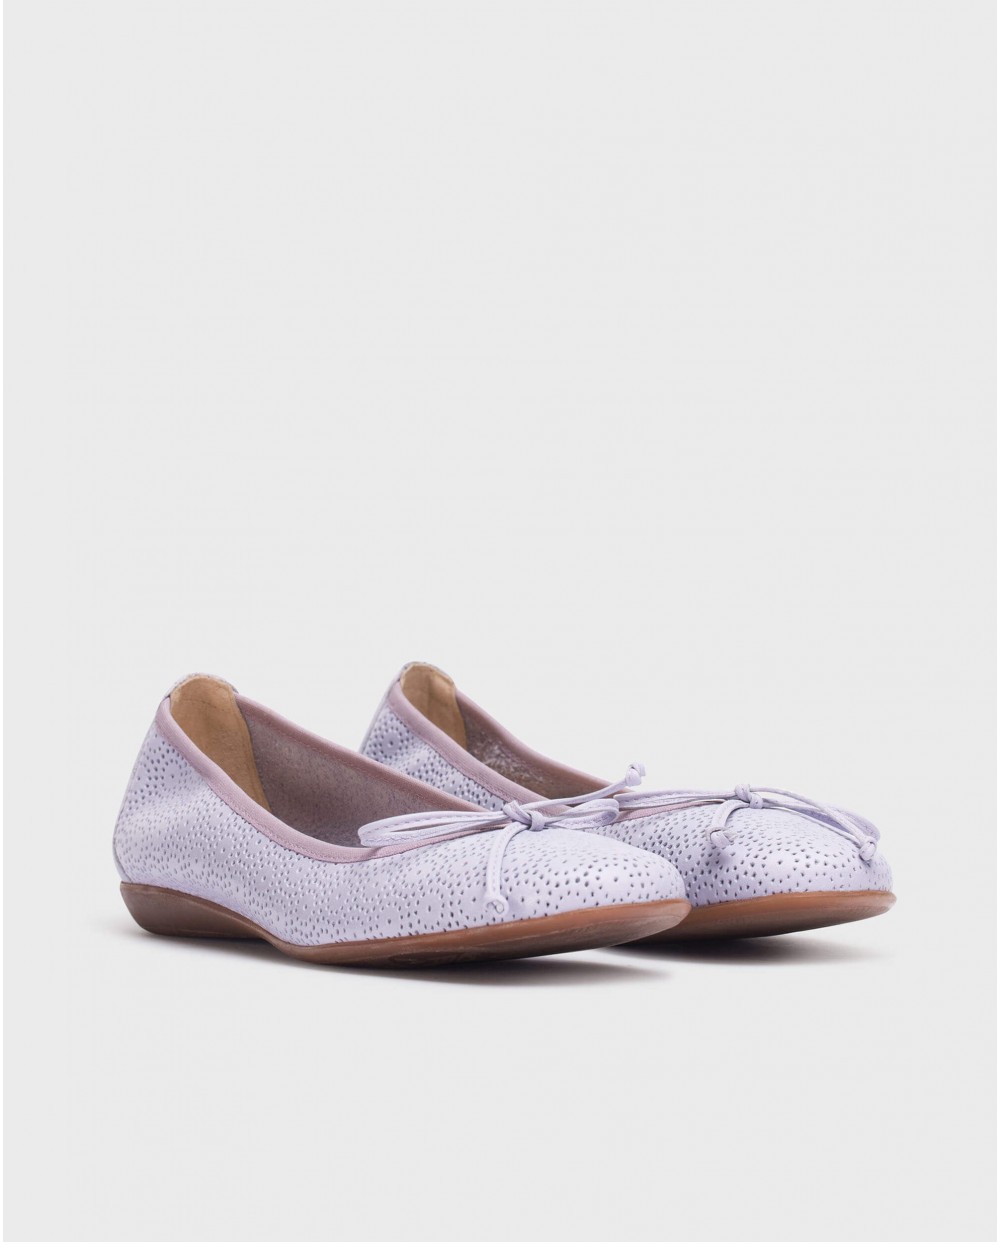 Wonders-Flat Shoes-Lavender Lace Ballerina